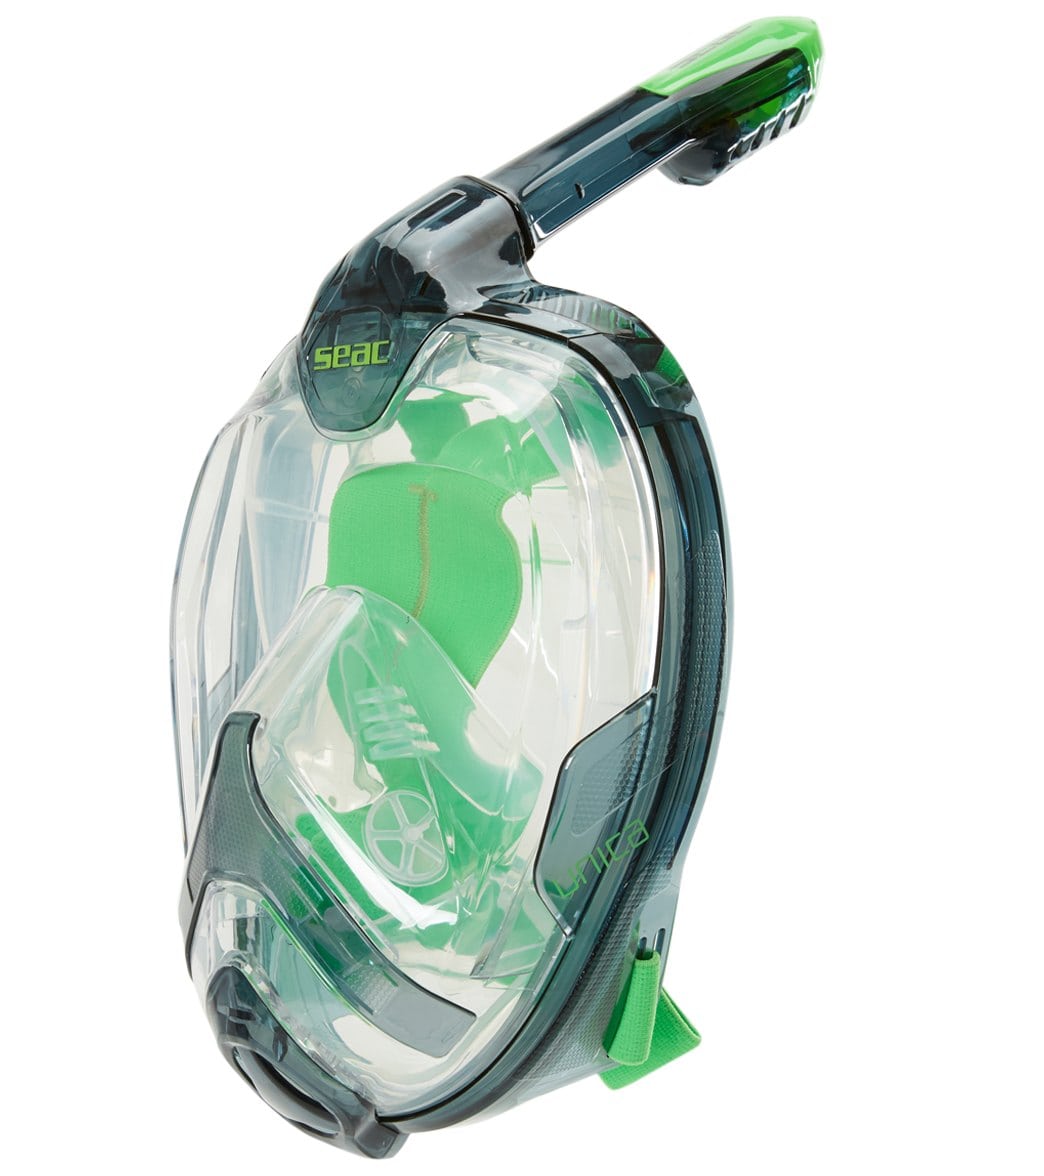 Seac Usa Unica Full Face Snorkeling Mask - Black/Lime L/Xl - Swimoutlet.com